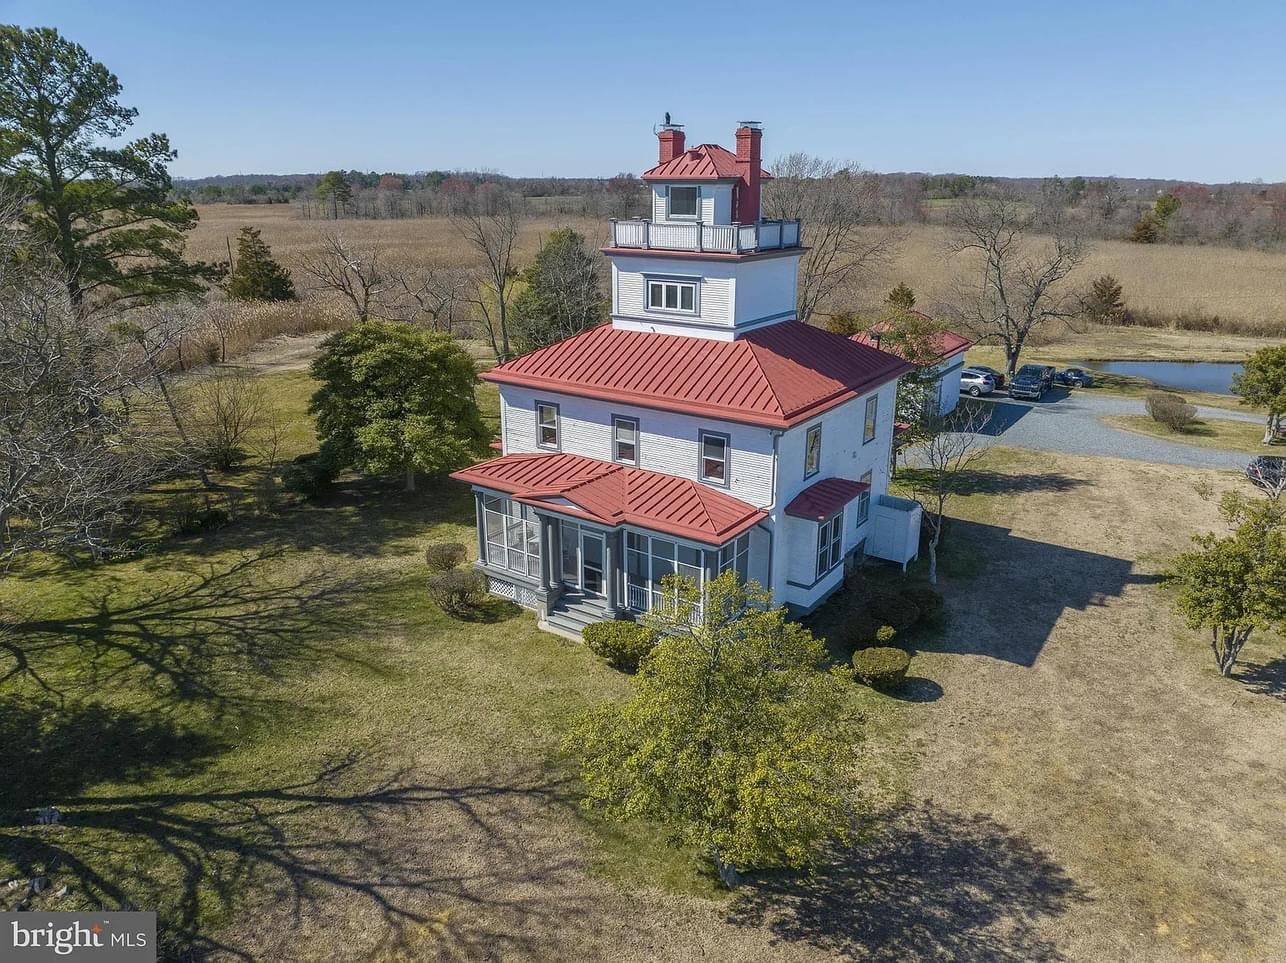 1905 Lighthouse For Sale In Middletown Delaware